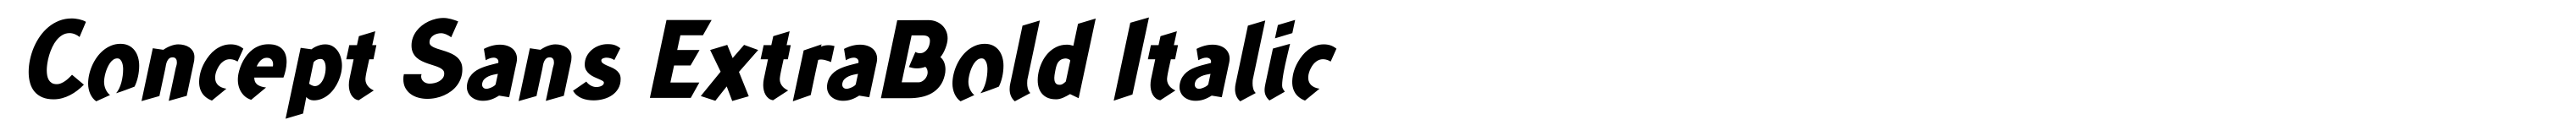 Concept Sans ExtraBold Italic